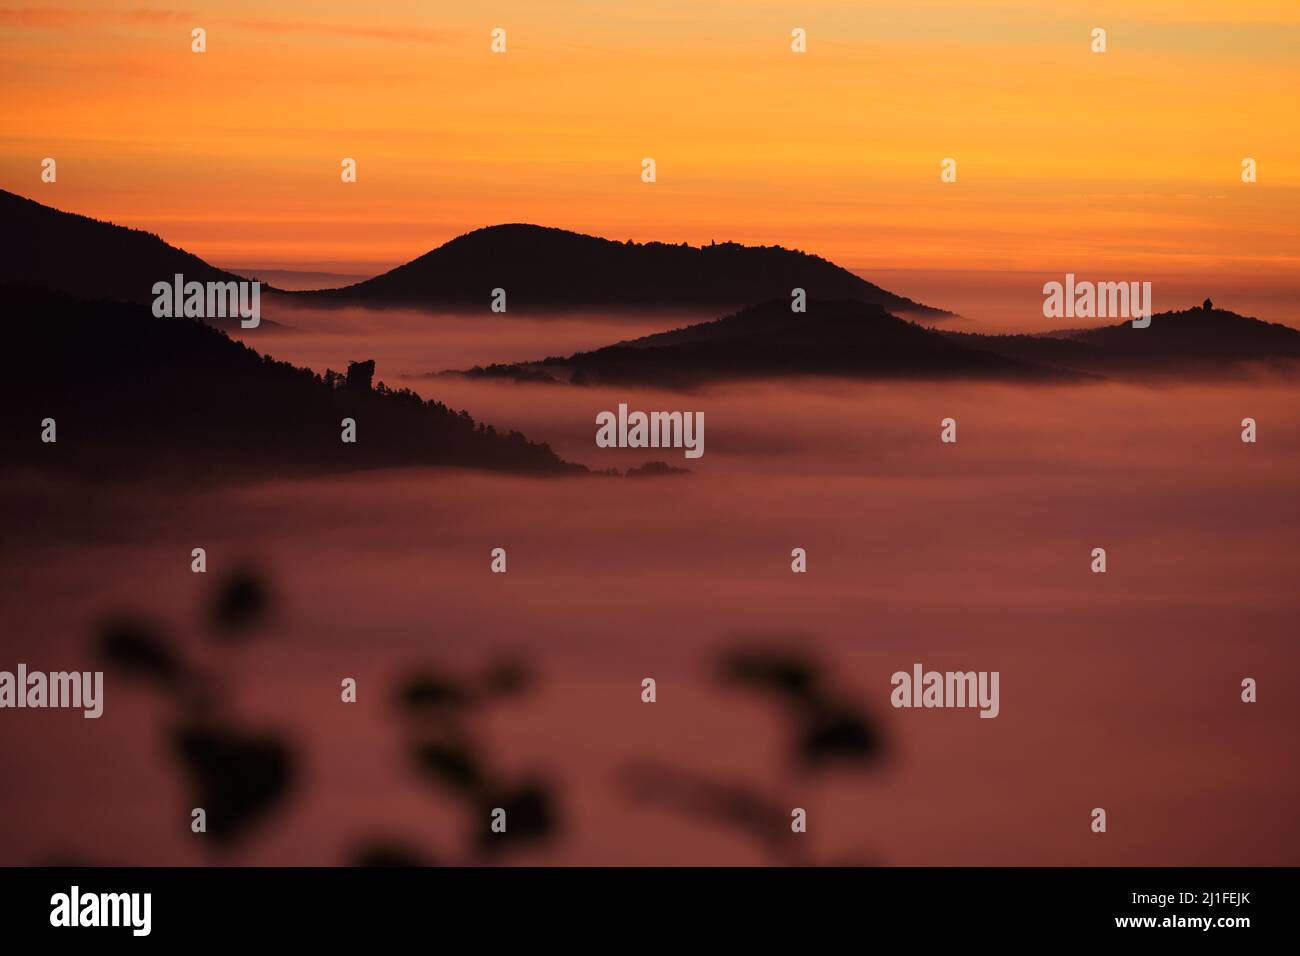 Sunrise at the Lindelbrunn castle ruins in the Dahner Felsenland, Rhineland-Palatinate, Germany Stock Photo